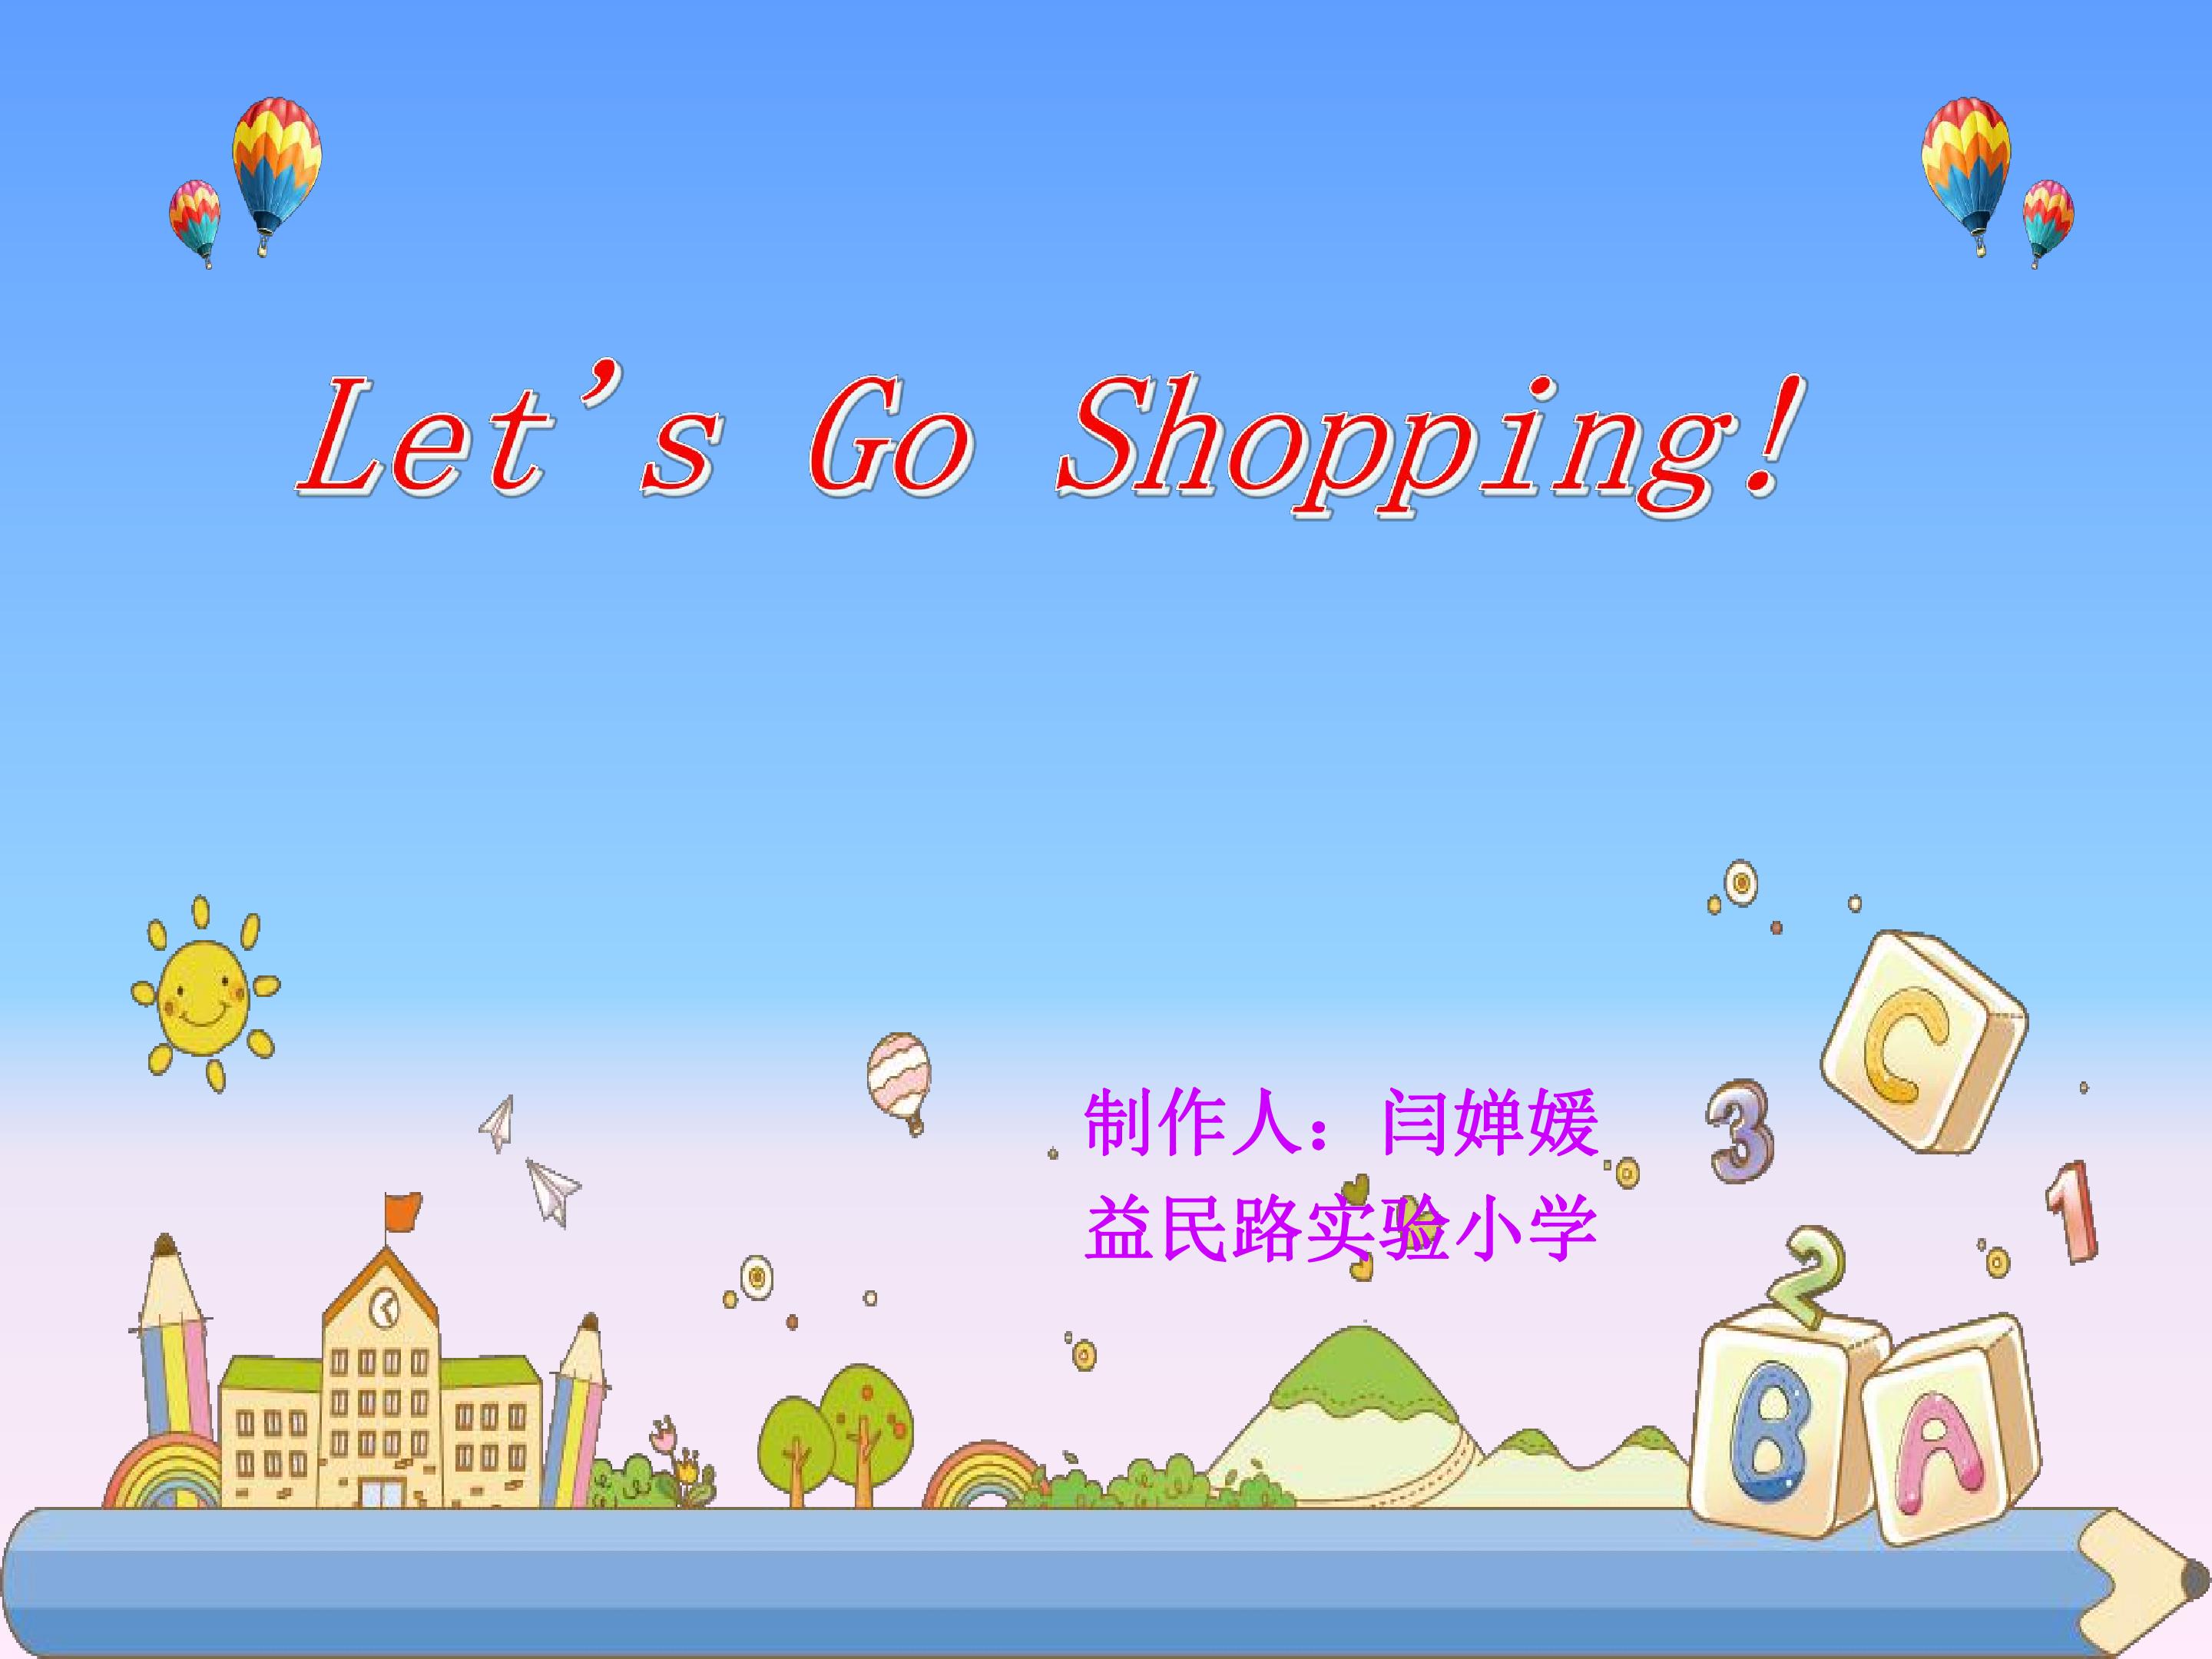 Let's go shopping!